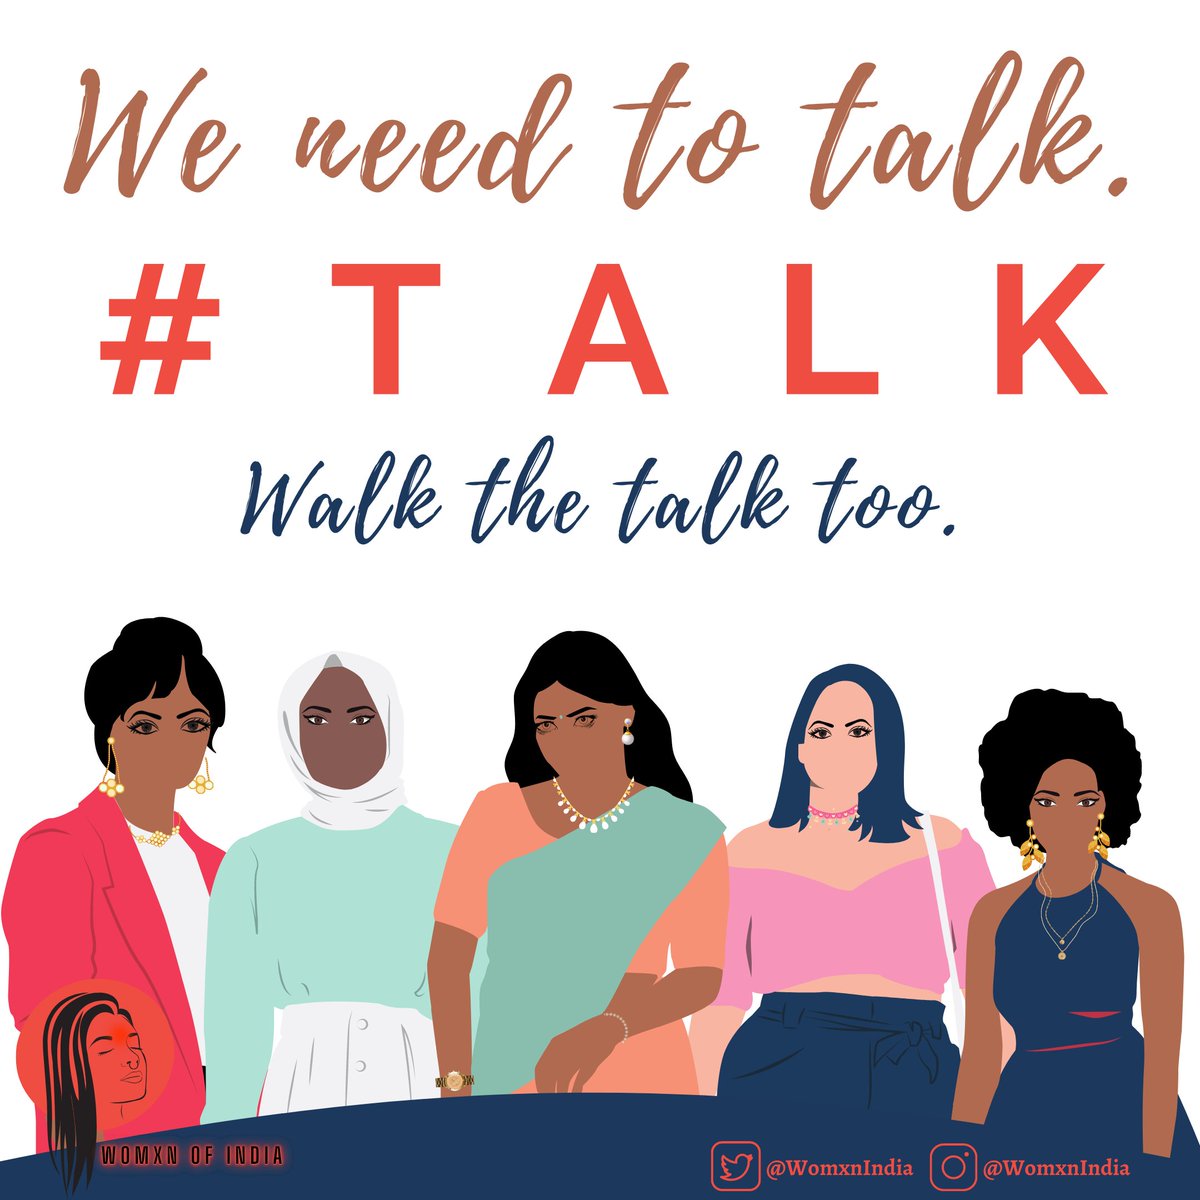 It's easy to preach....
We need to talk and walk the talk too....

#WeNeedToTalk
#WalktheTalk
#WomenIndia
#WomxnIndia
#Women #womxn
#TalkingTuesday